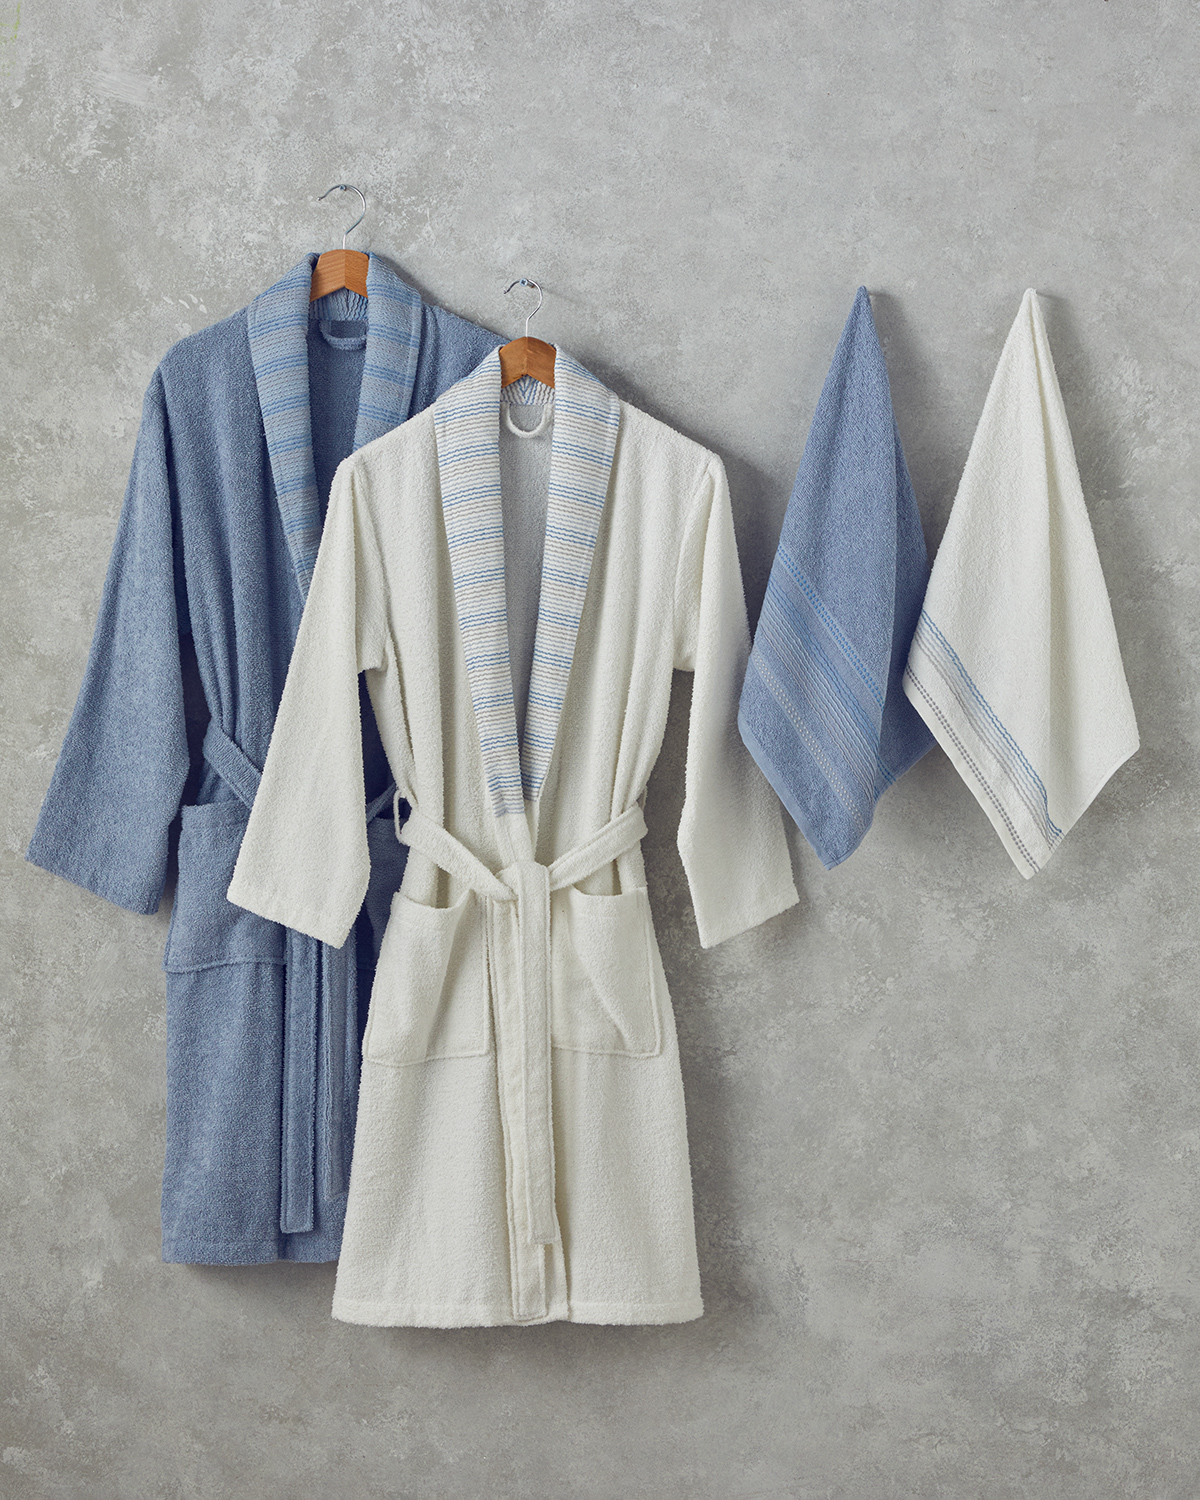 Wolin Cotton Polyester Bordered Bathrobe Set S-M & L-XL White - Blue